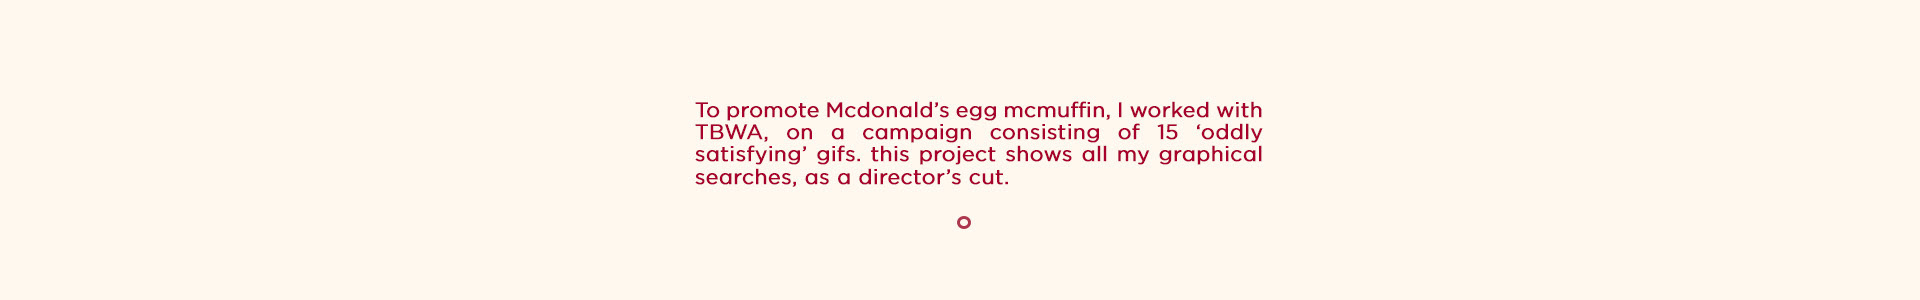 Egg McMuffin - Director's Cut on Behance2445ca83279865.5d38bfcd30268.jpg